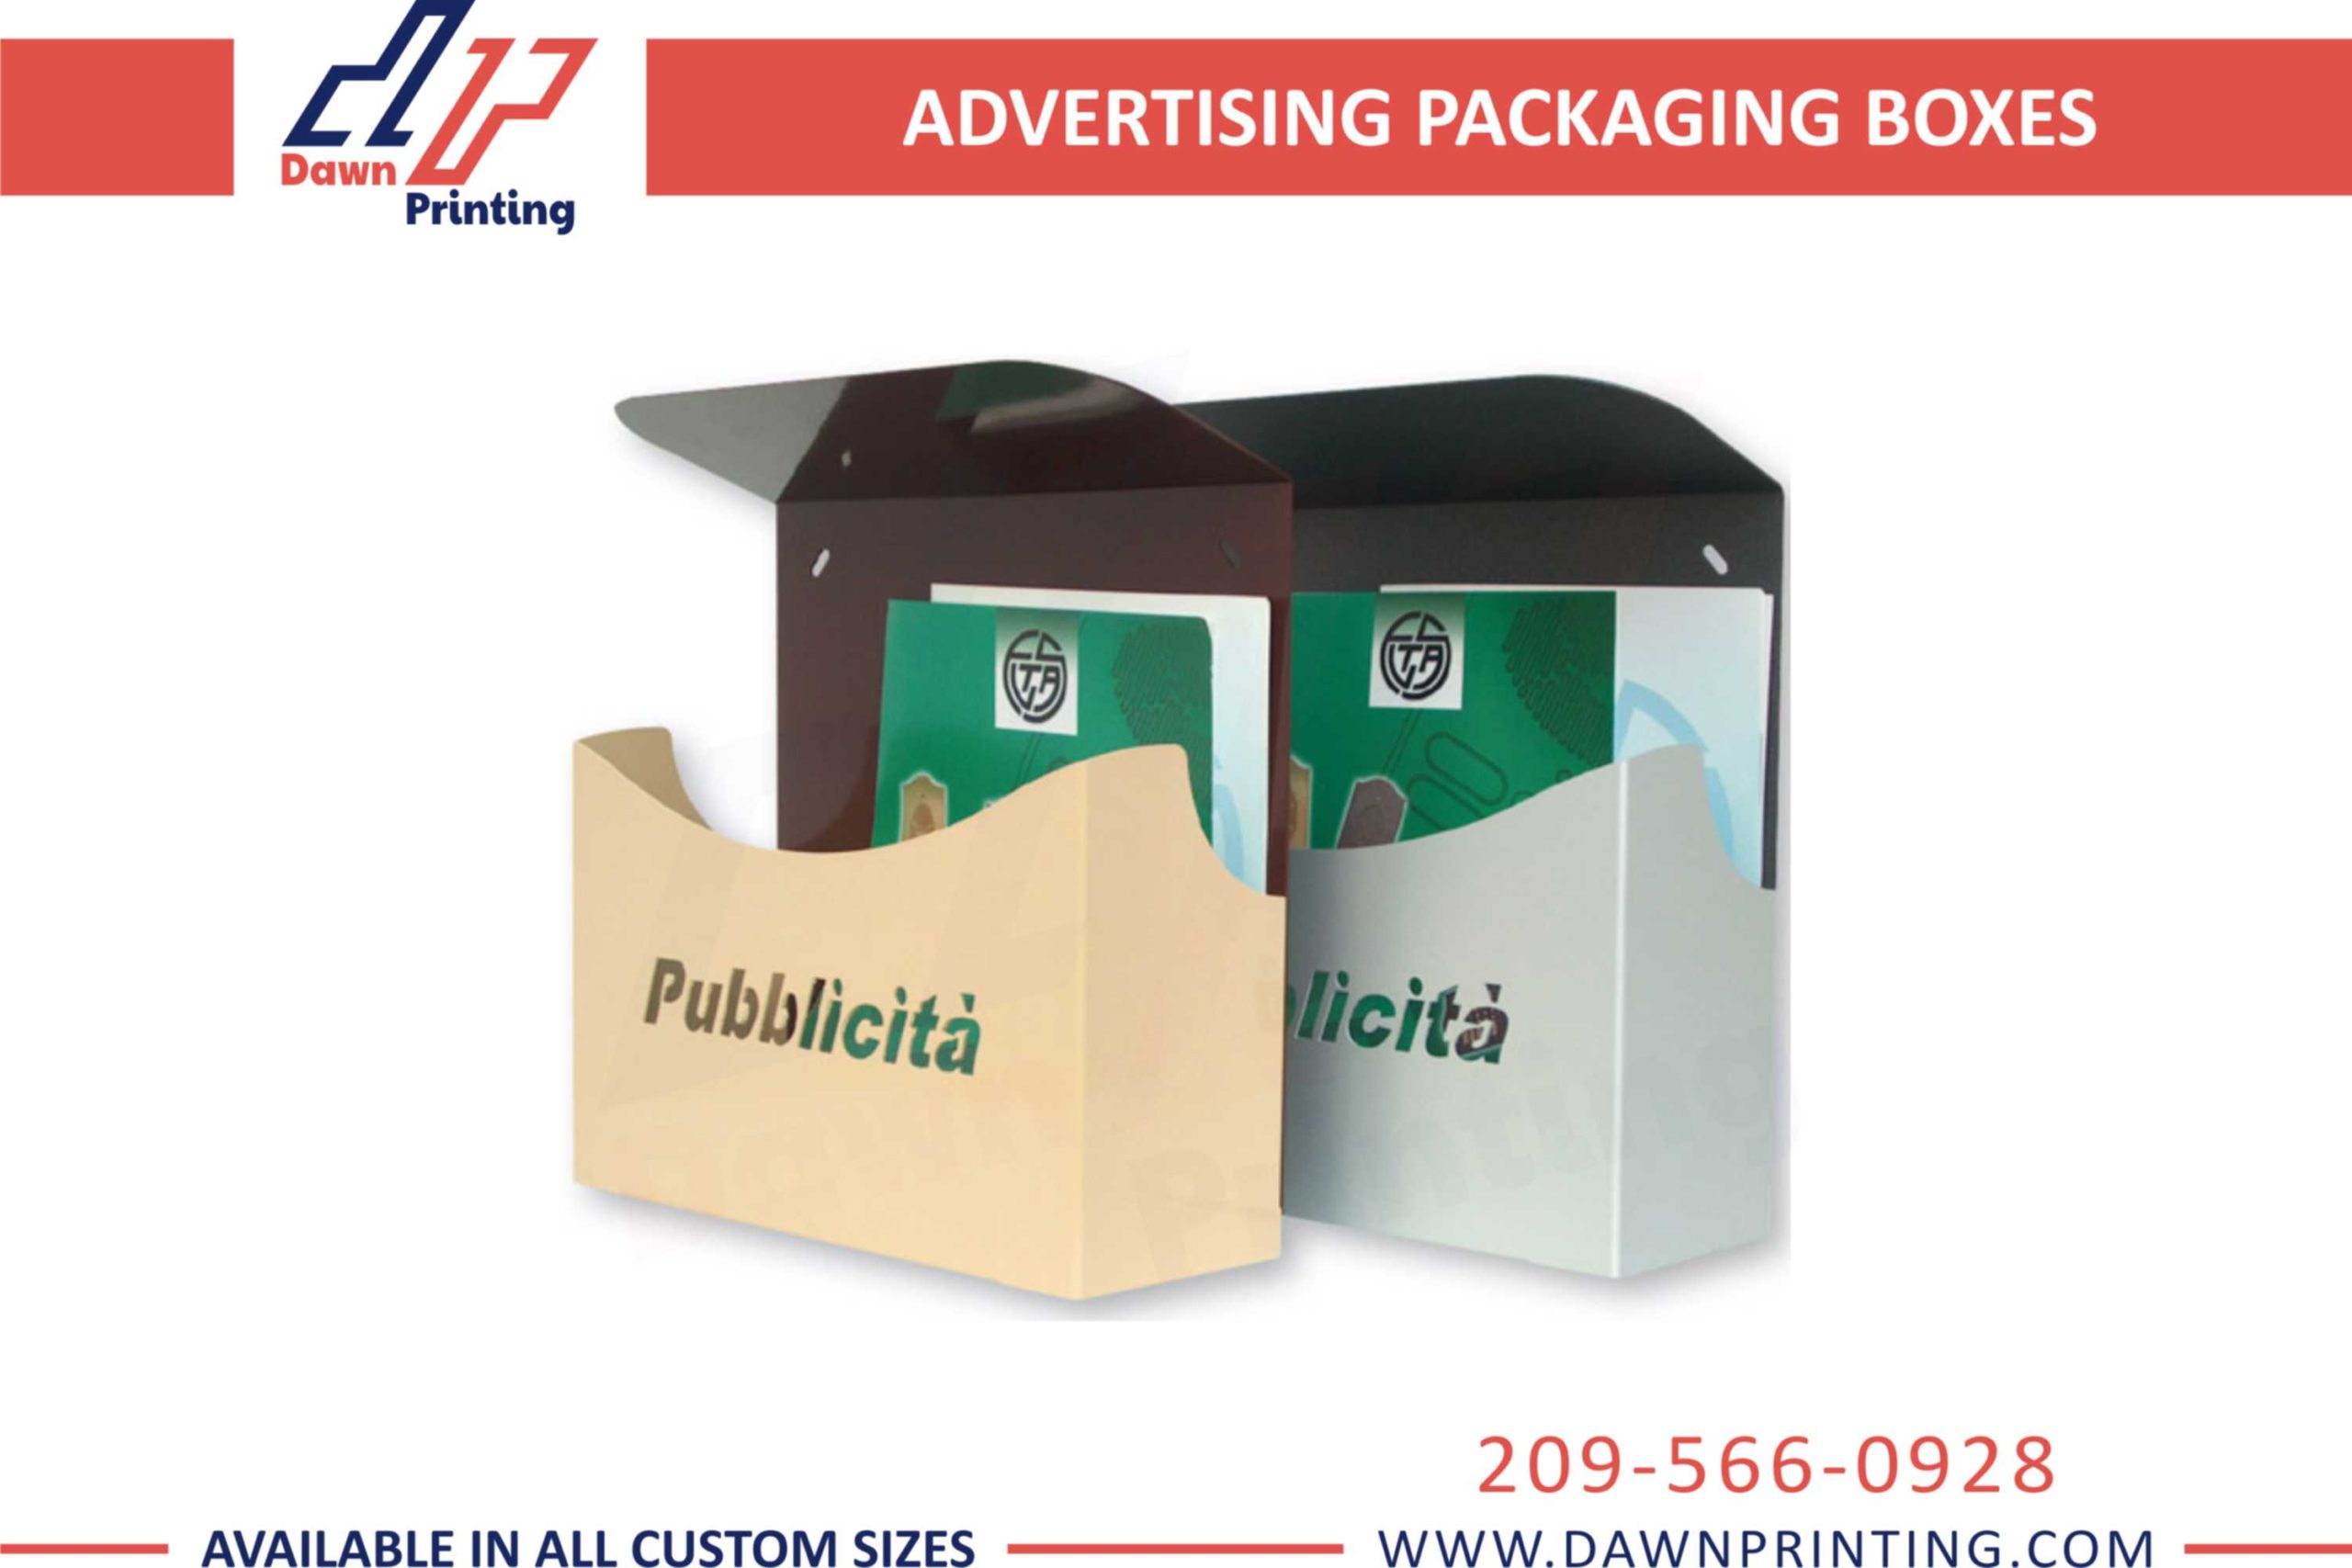 Advertising Packaging Design Boxes - Dawn Printing